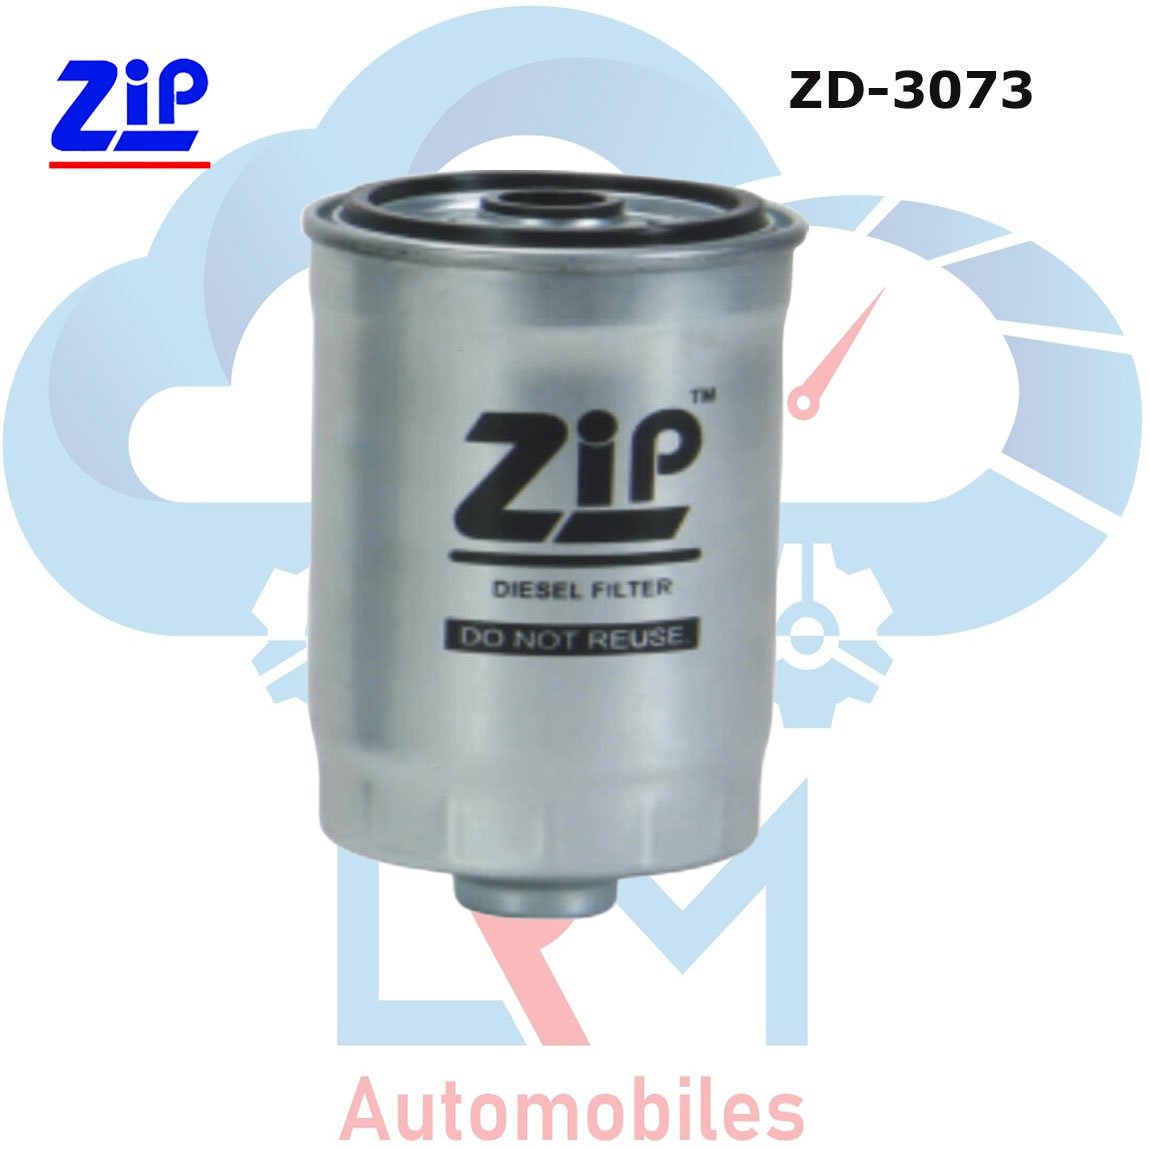 Diesel Filter For Hyundai Verna in Zip Filter